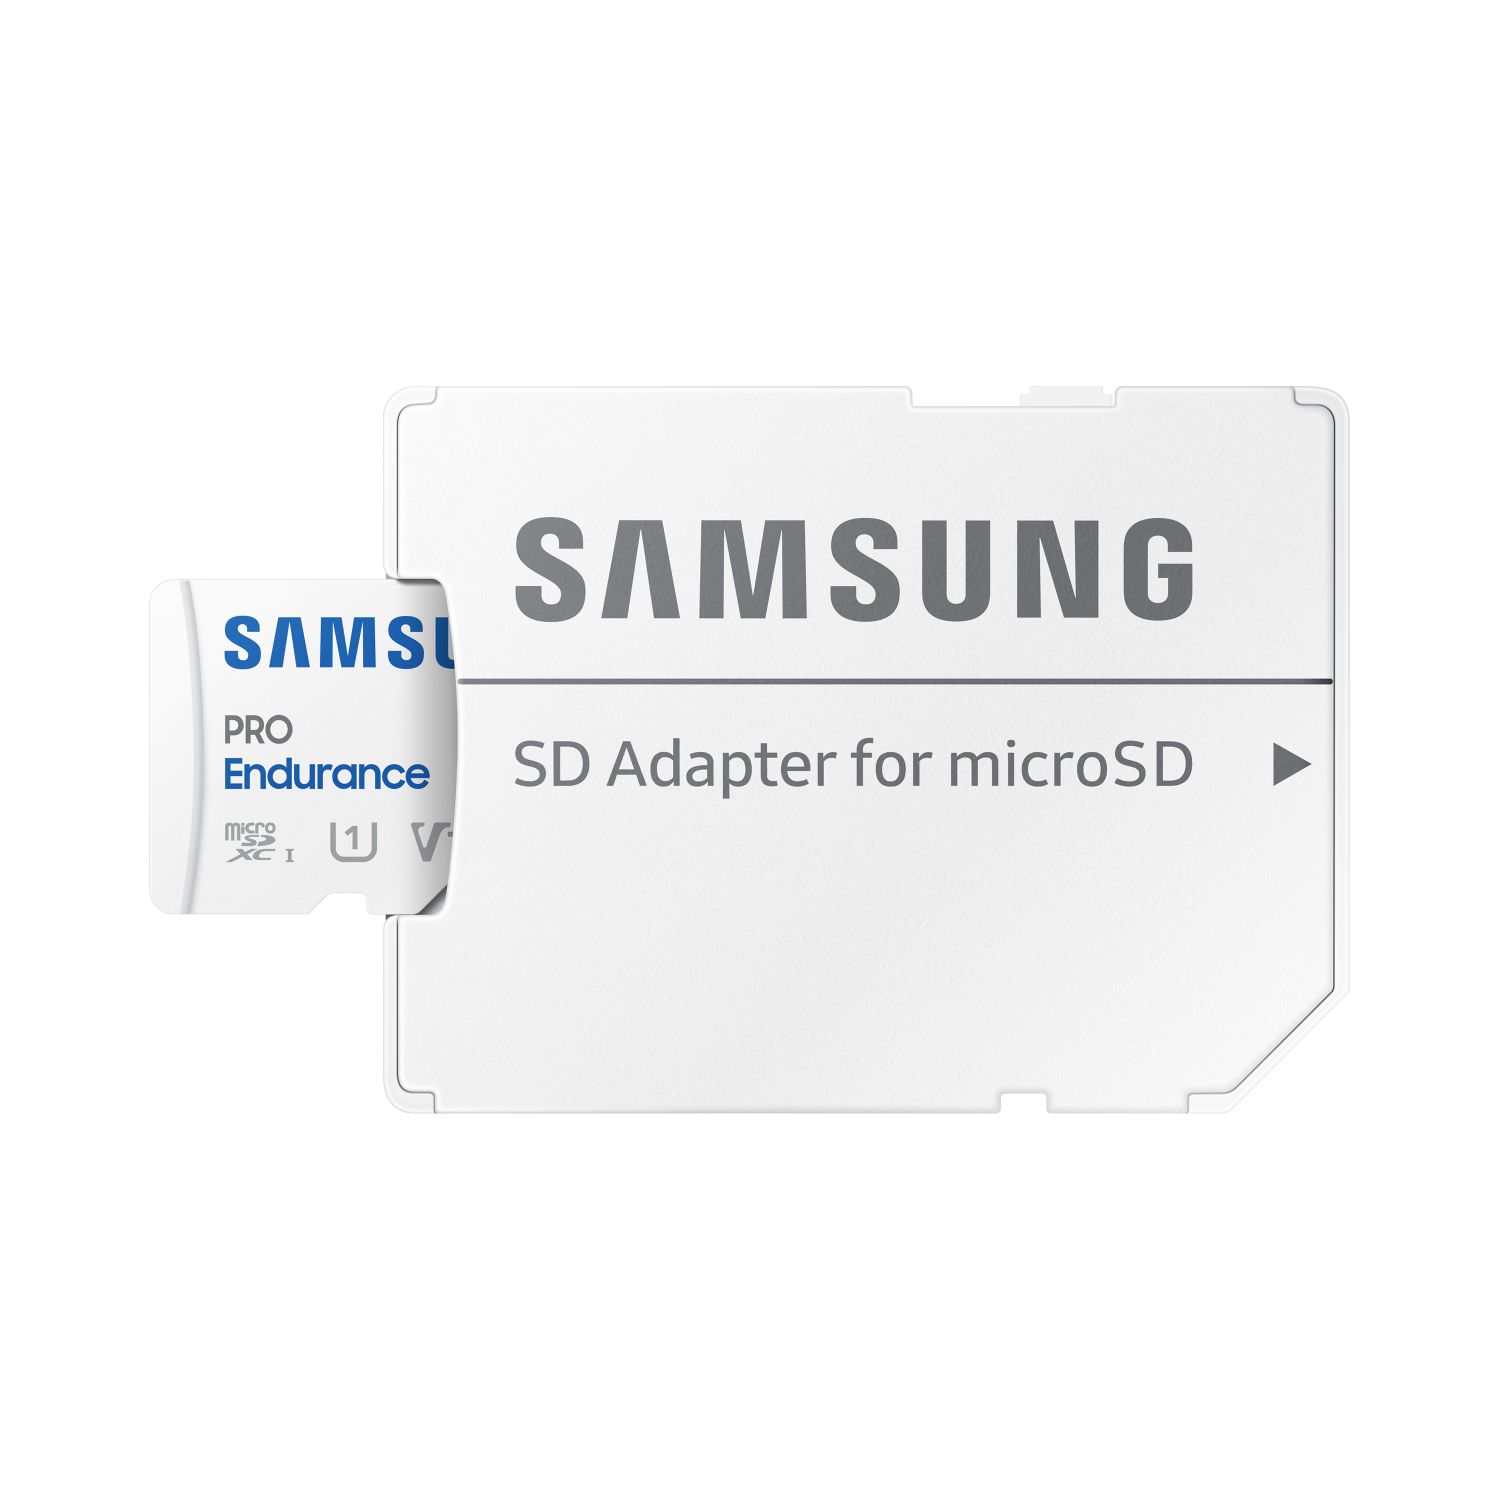 MB-MJ64KA/EU - Micro SDXC Samsung Pro Endurance 64Gb Clase 10 UHS-I U1 V10 Lectura 100 Mb/s Escritura 30Mb/s (MB-MJ64KA/EU)